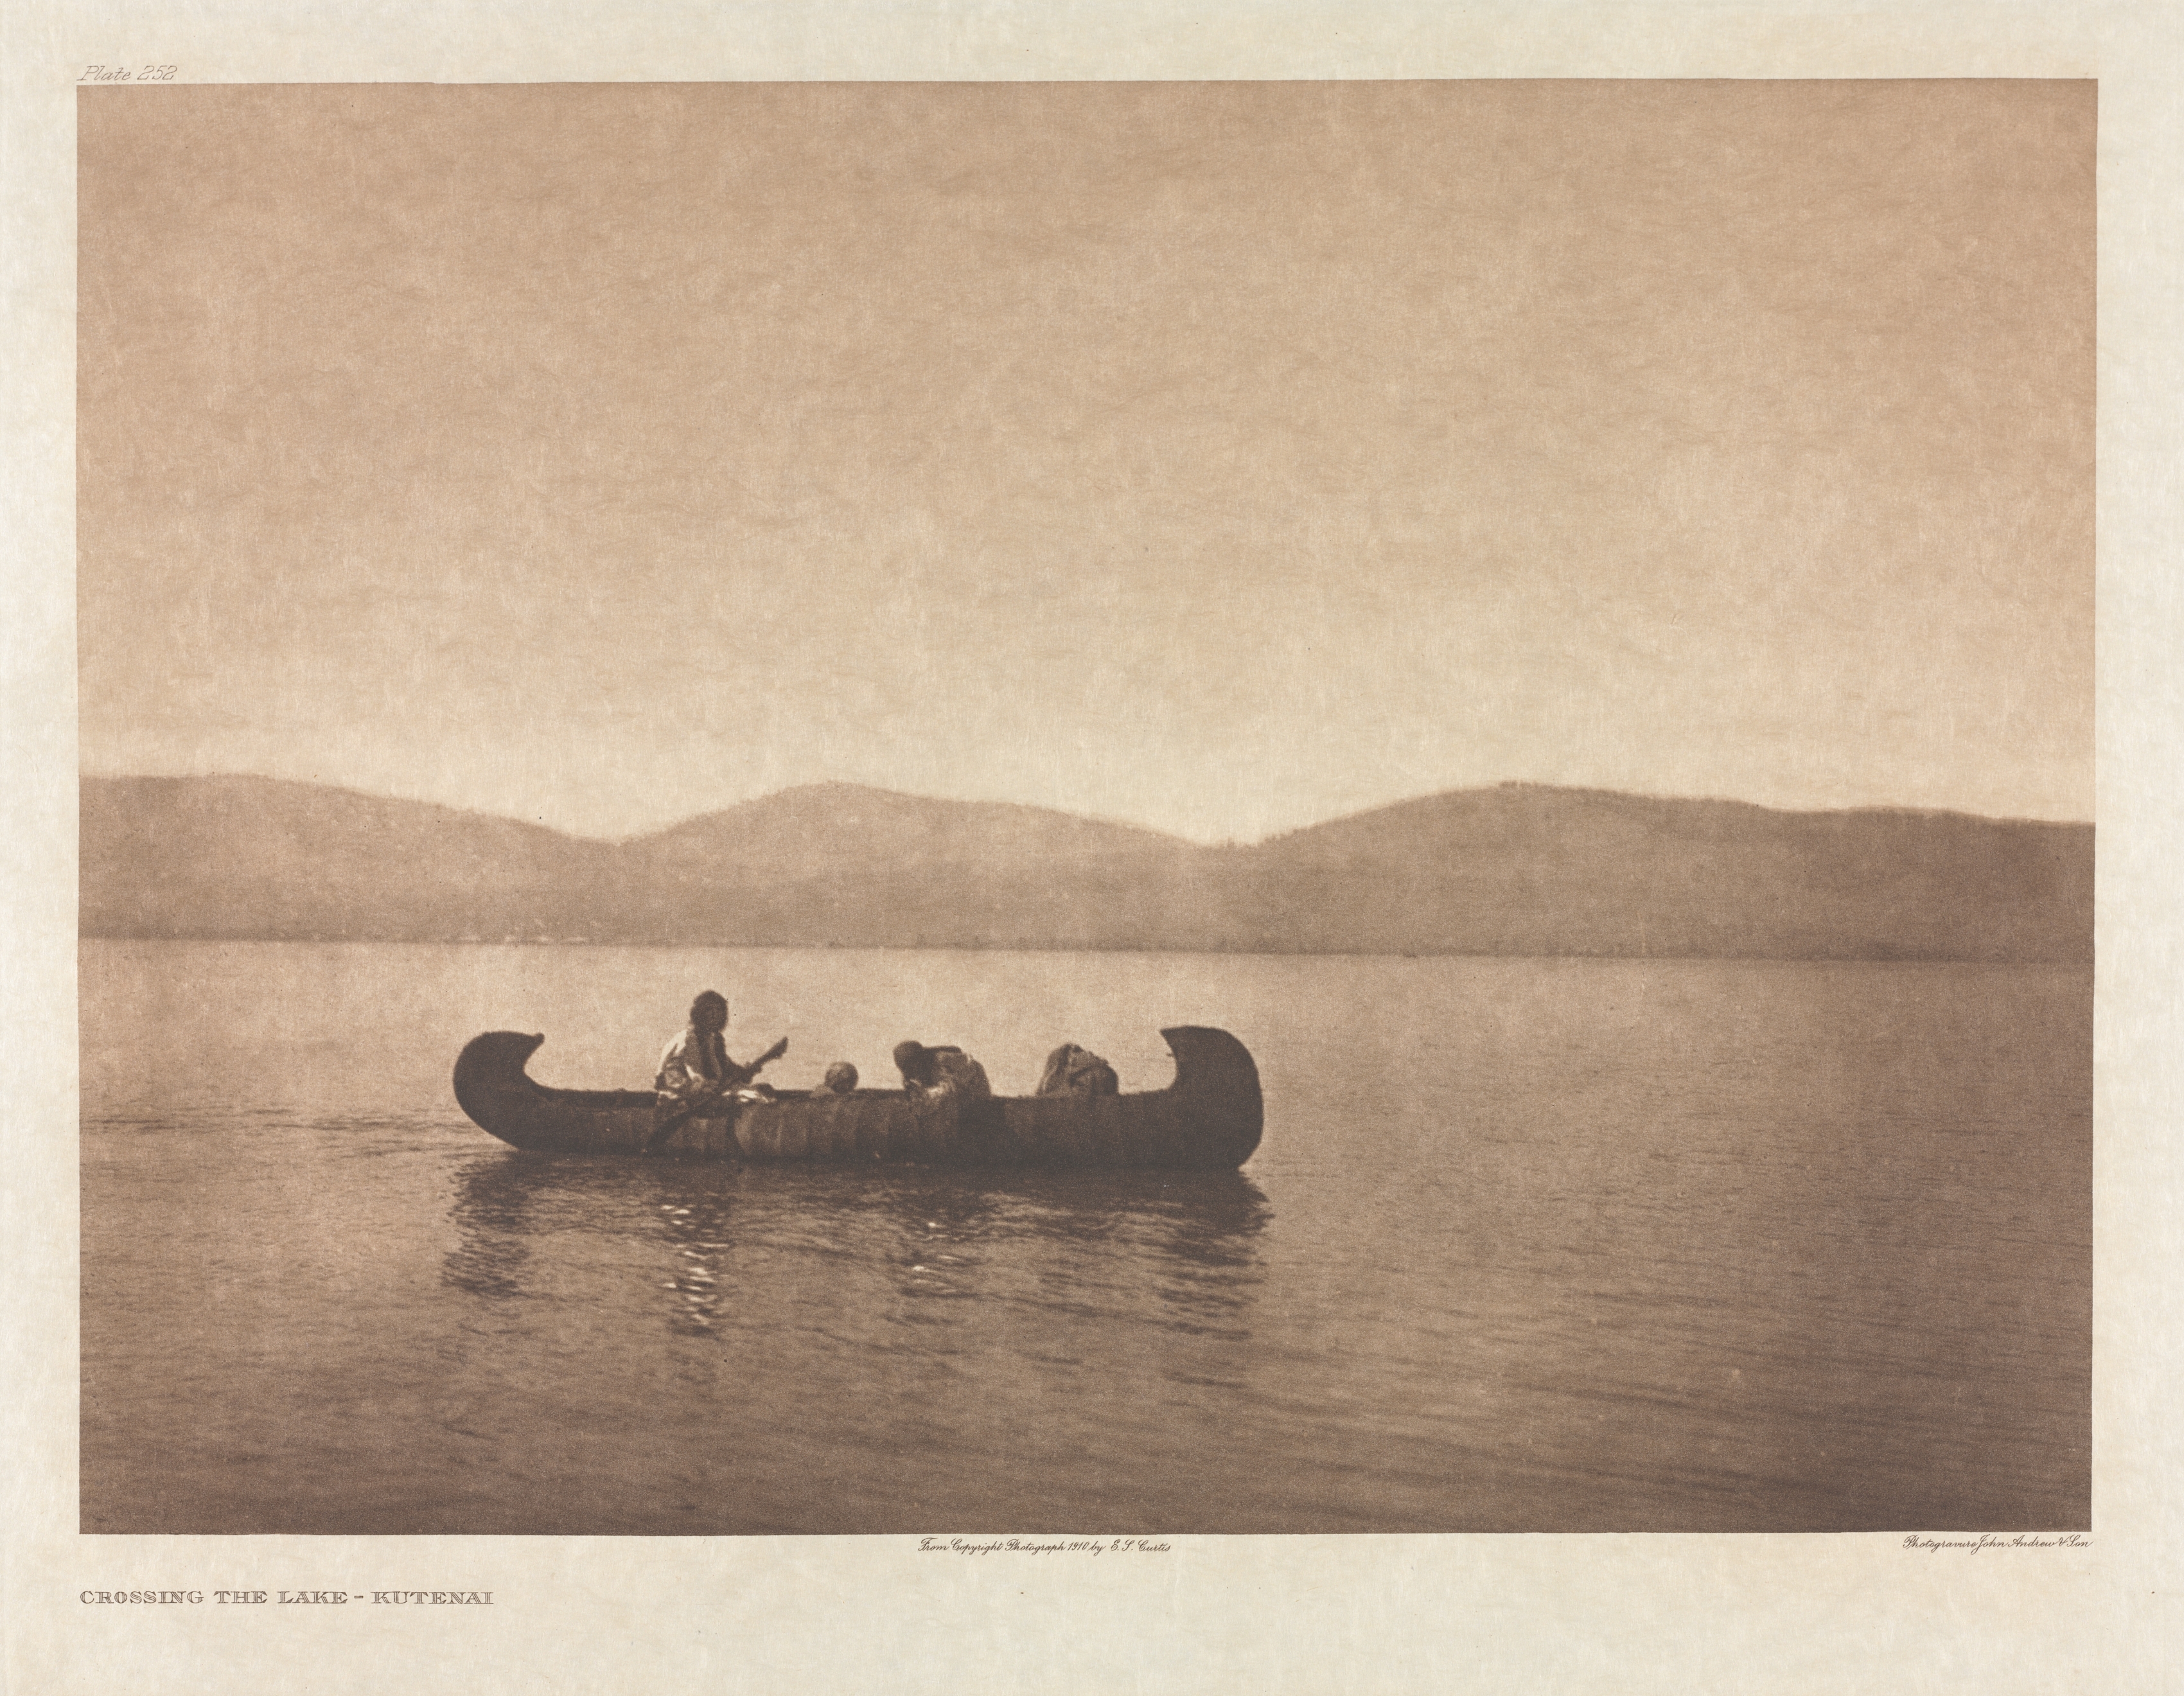 Portfolio VII, Plate 252: Crossing the Lake - Kutenai